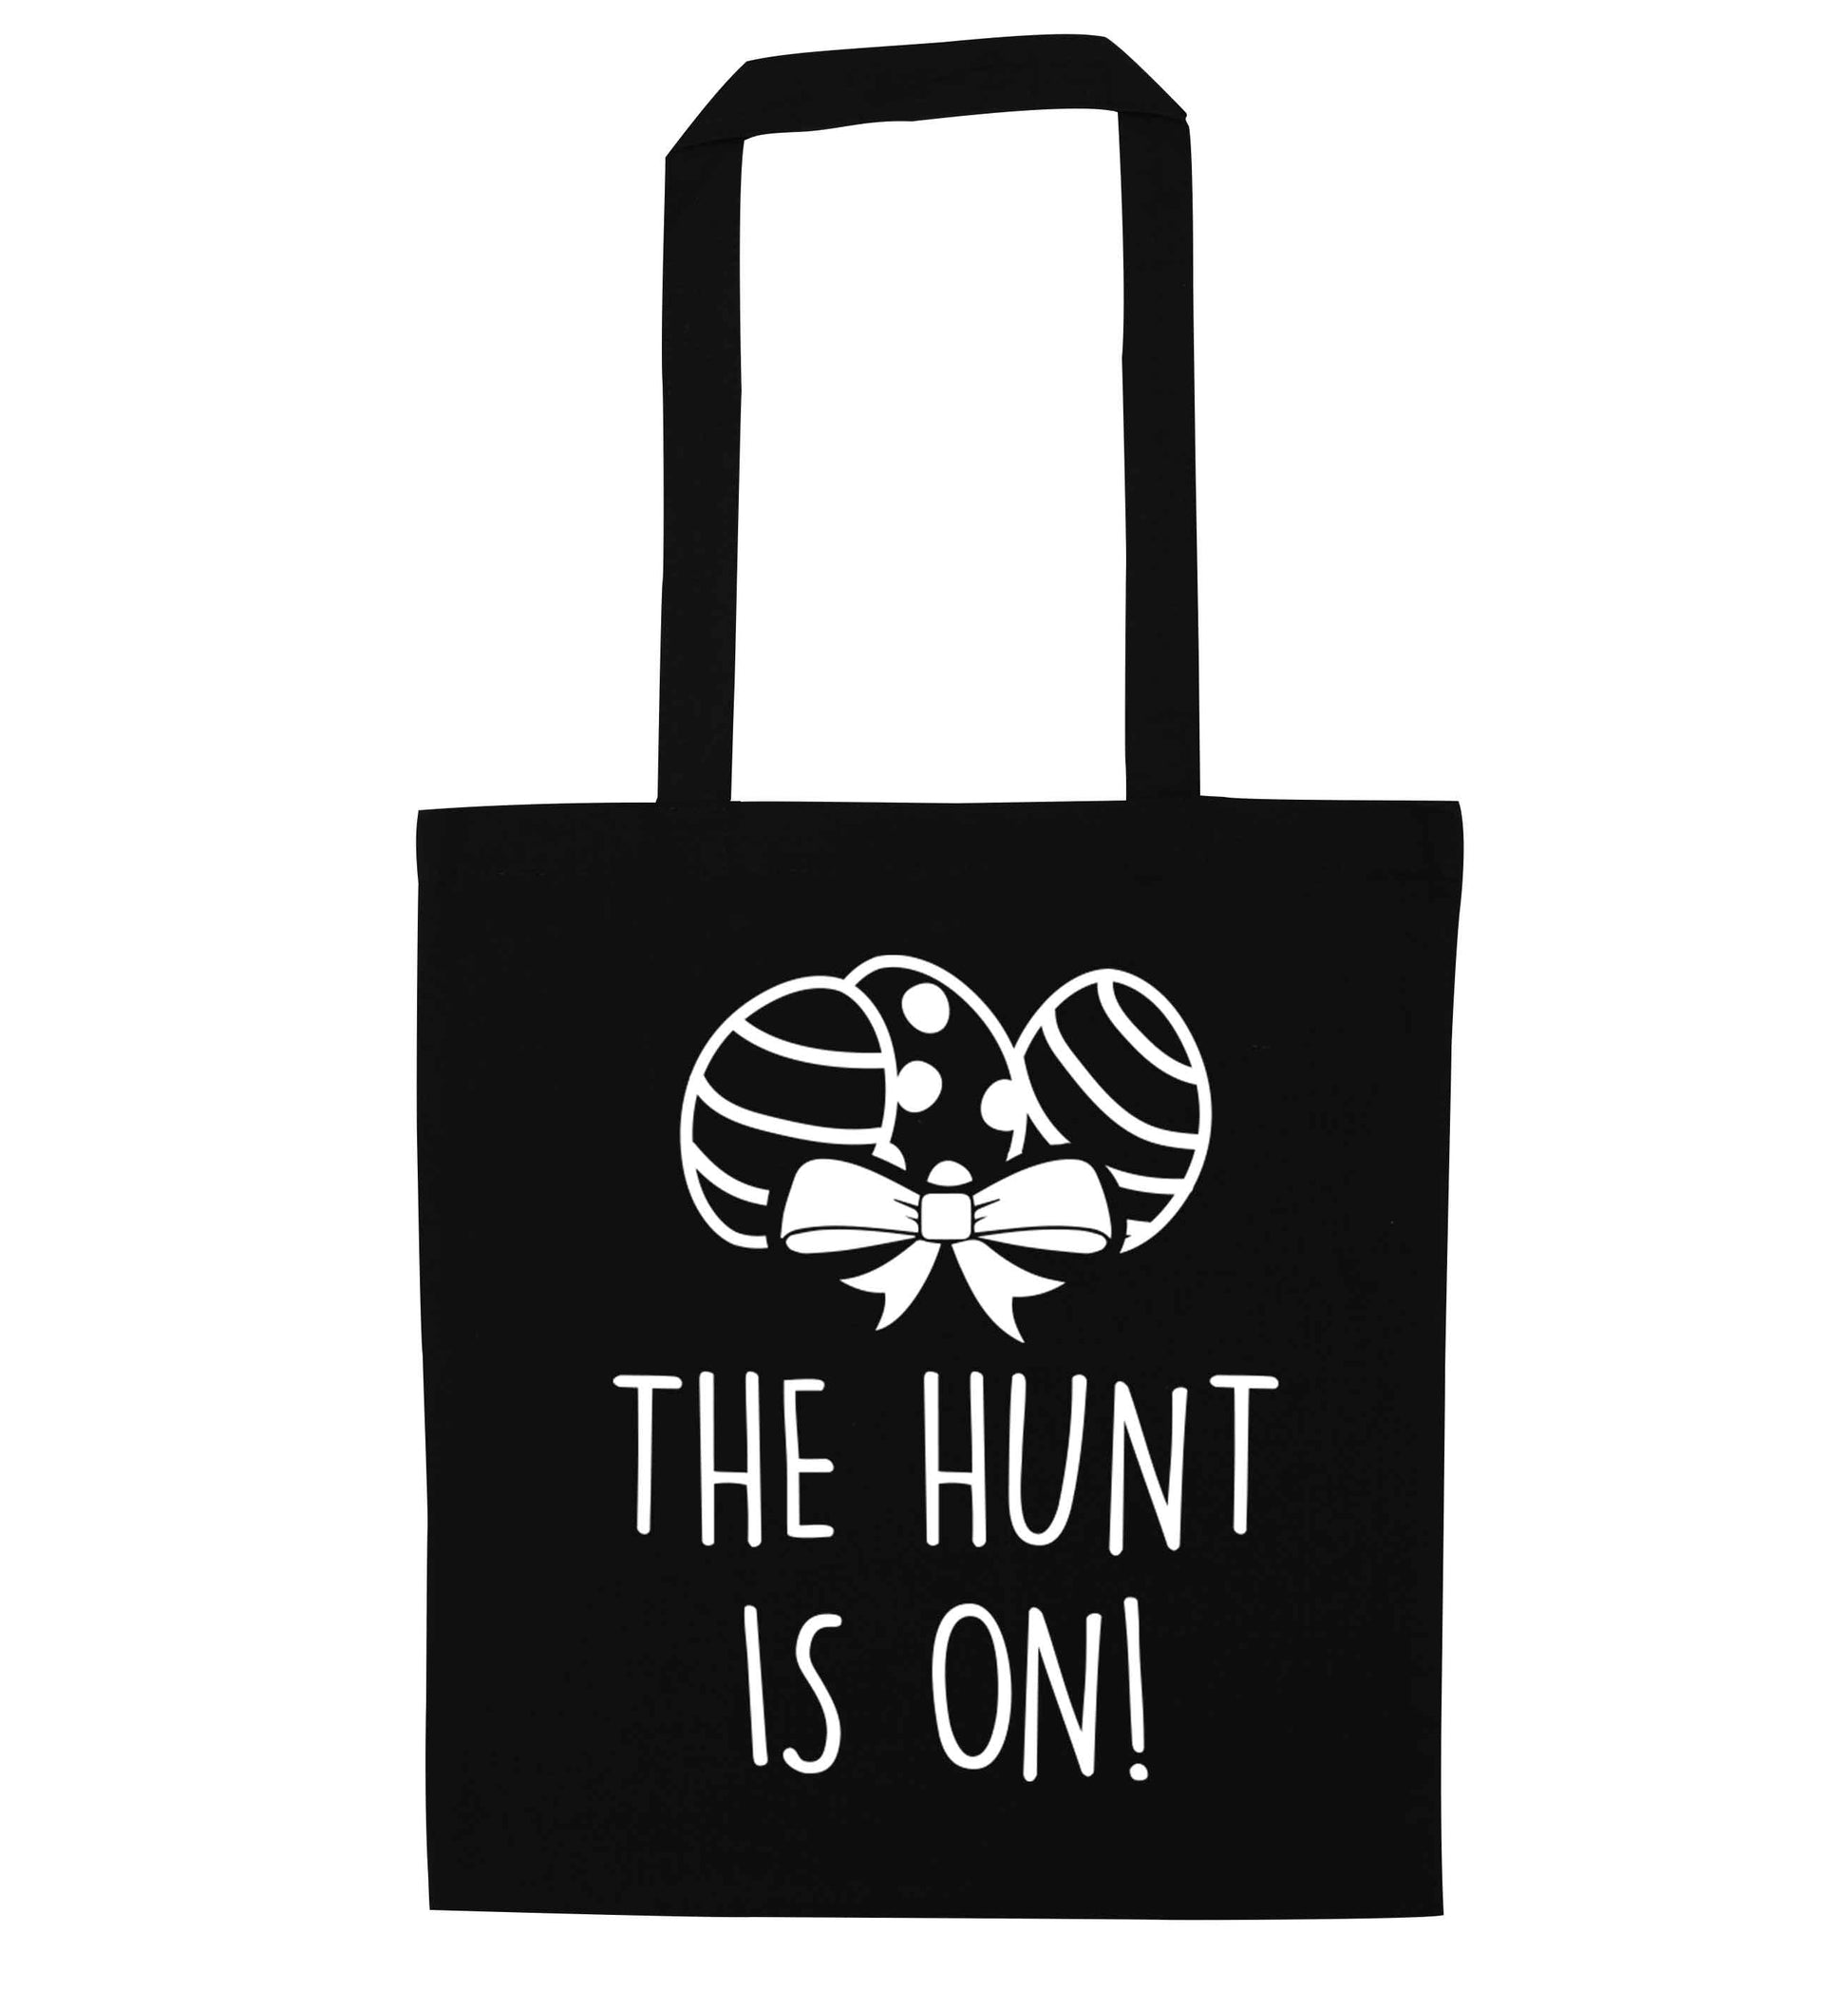 The hunt is on black tote bag